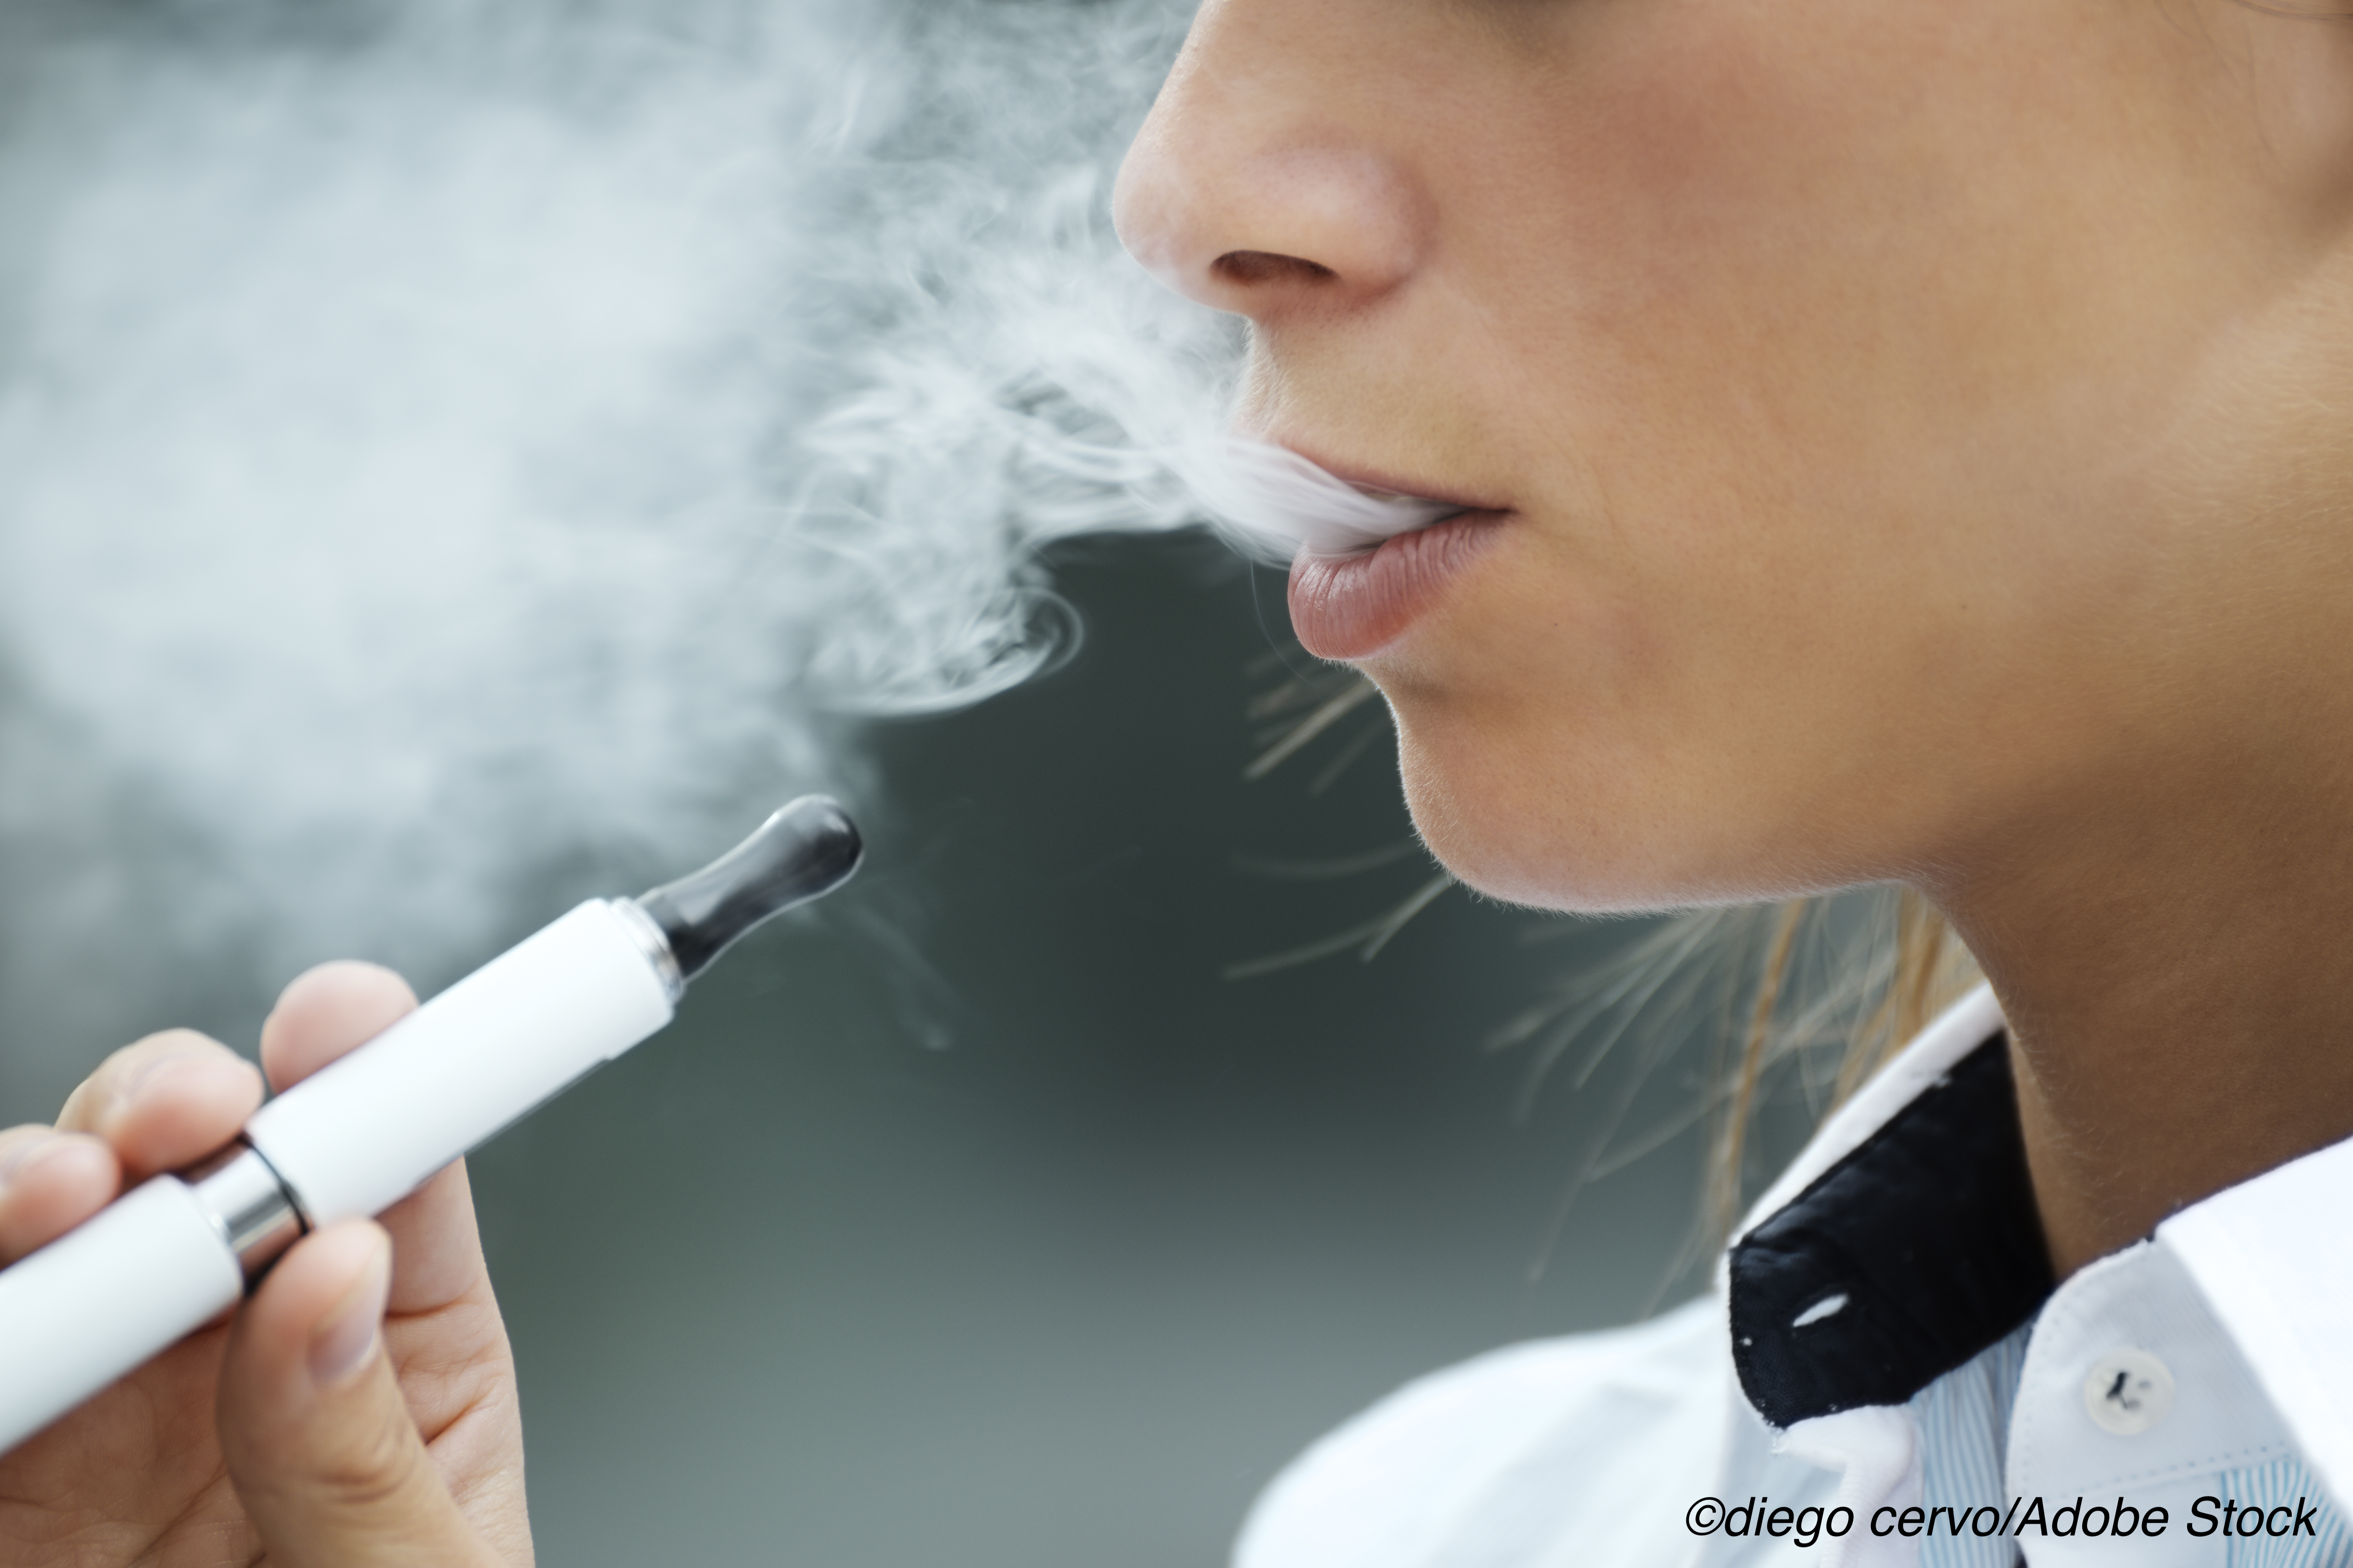 High Nicotine E-cigs Helped Smokers Cut Back on Tobacco